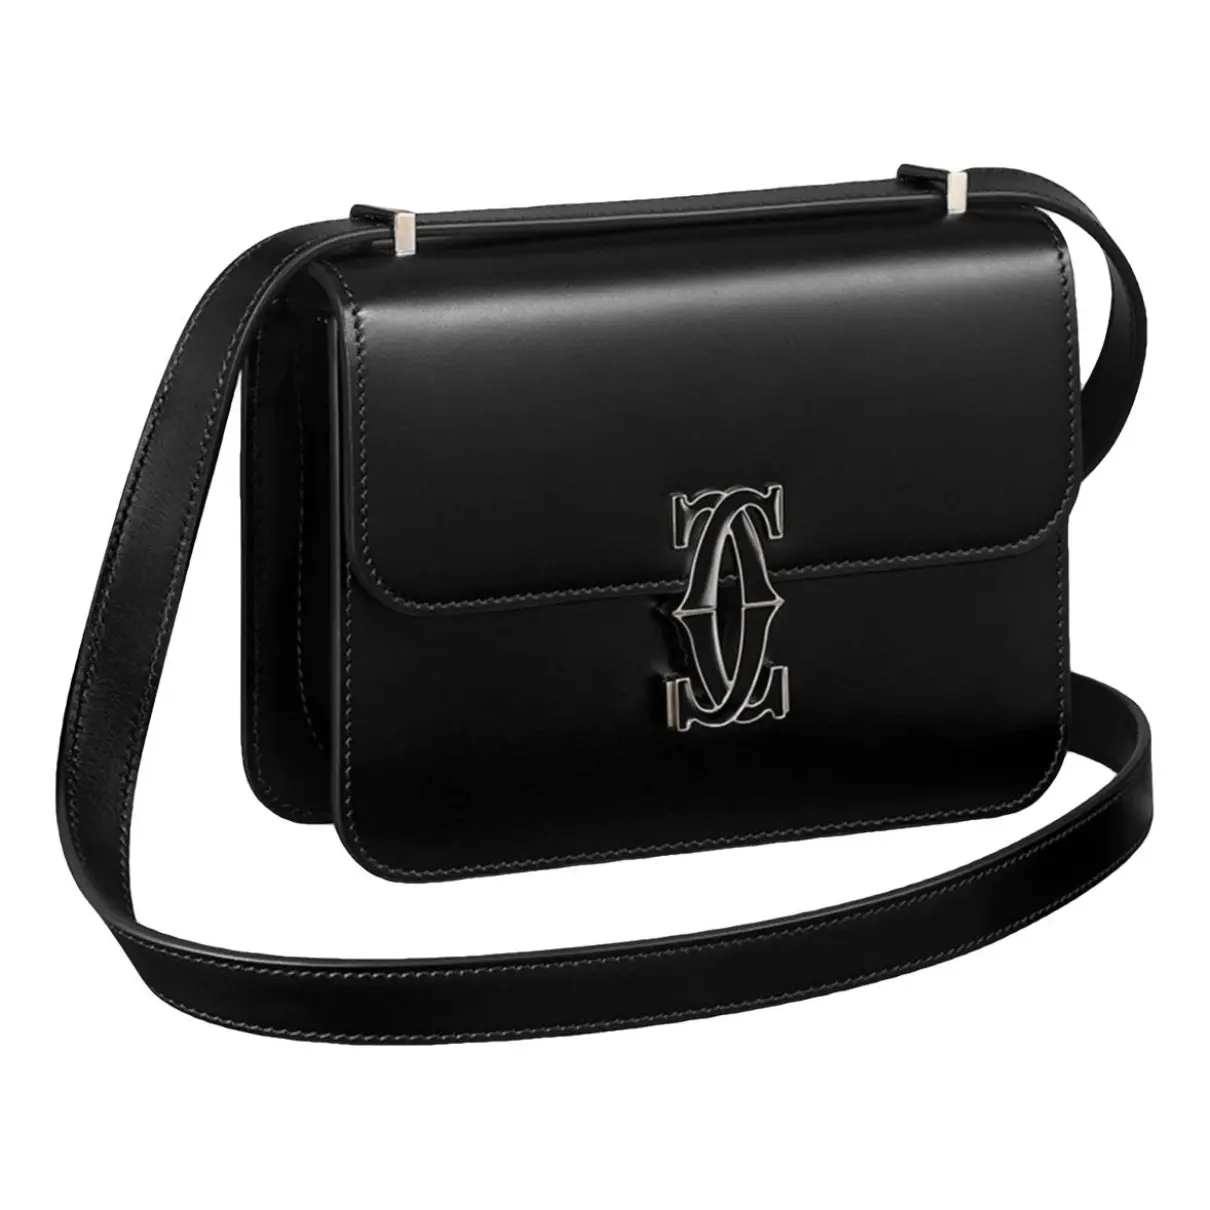 C leather mini bag Cartier